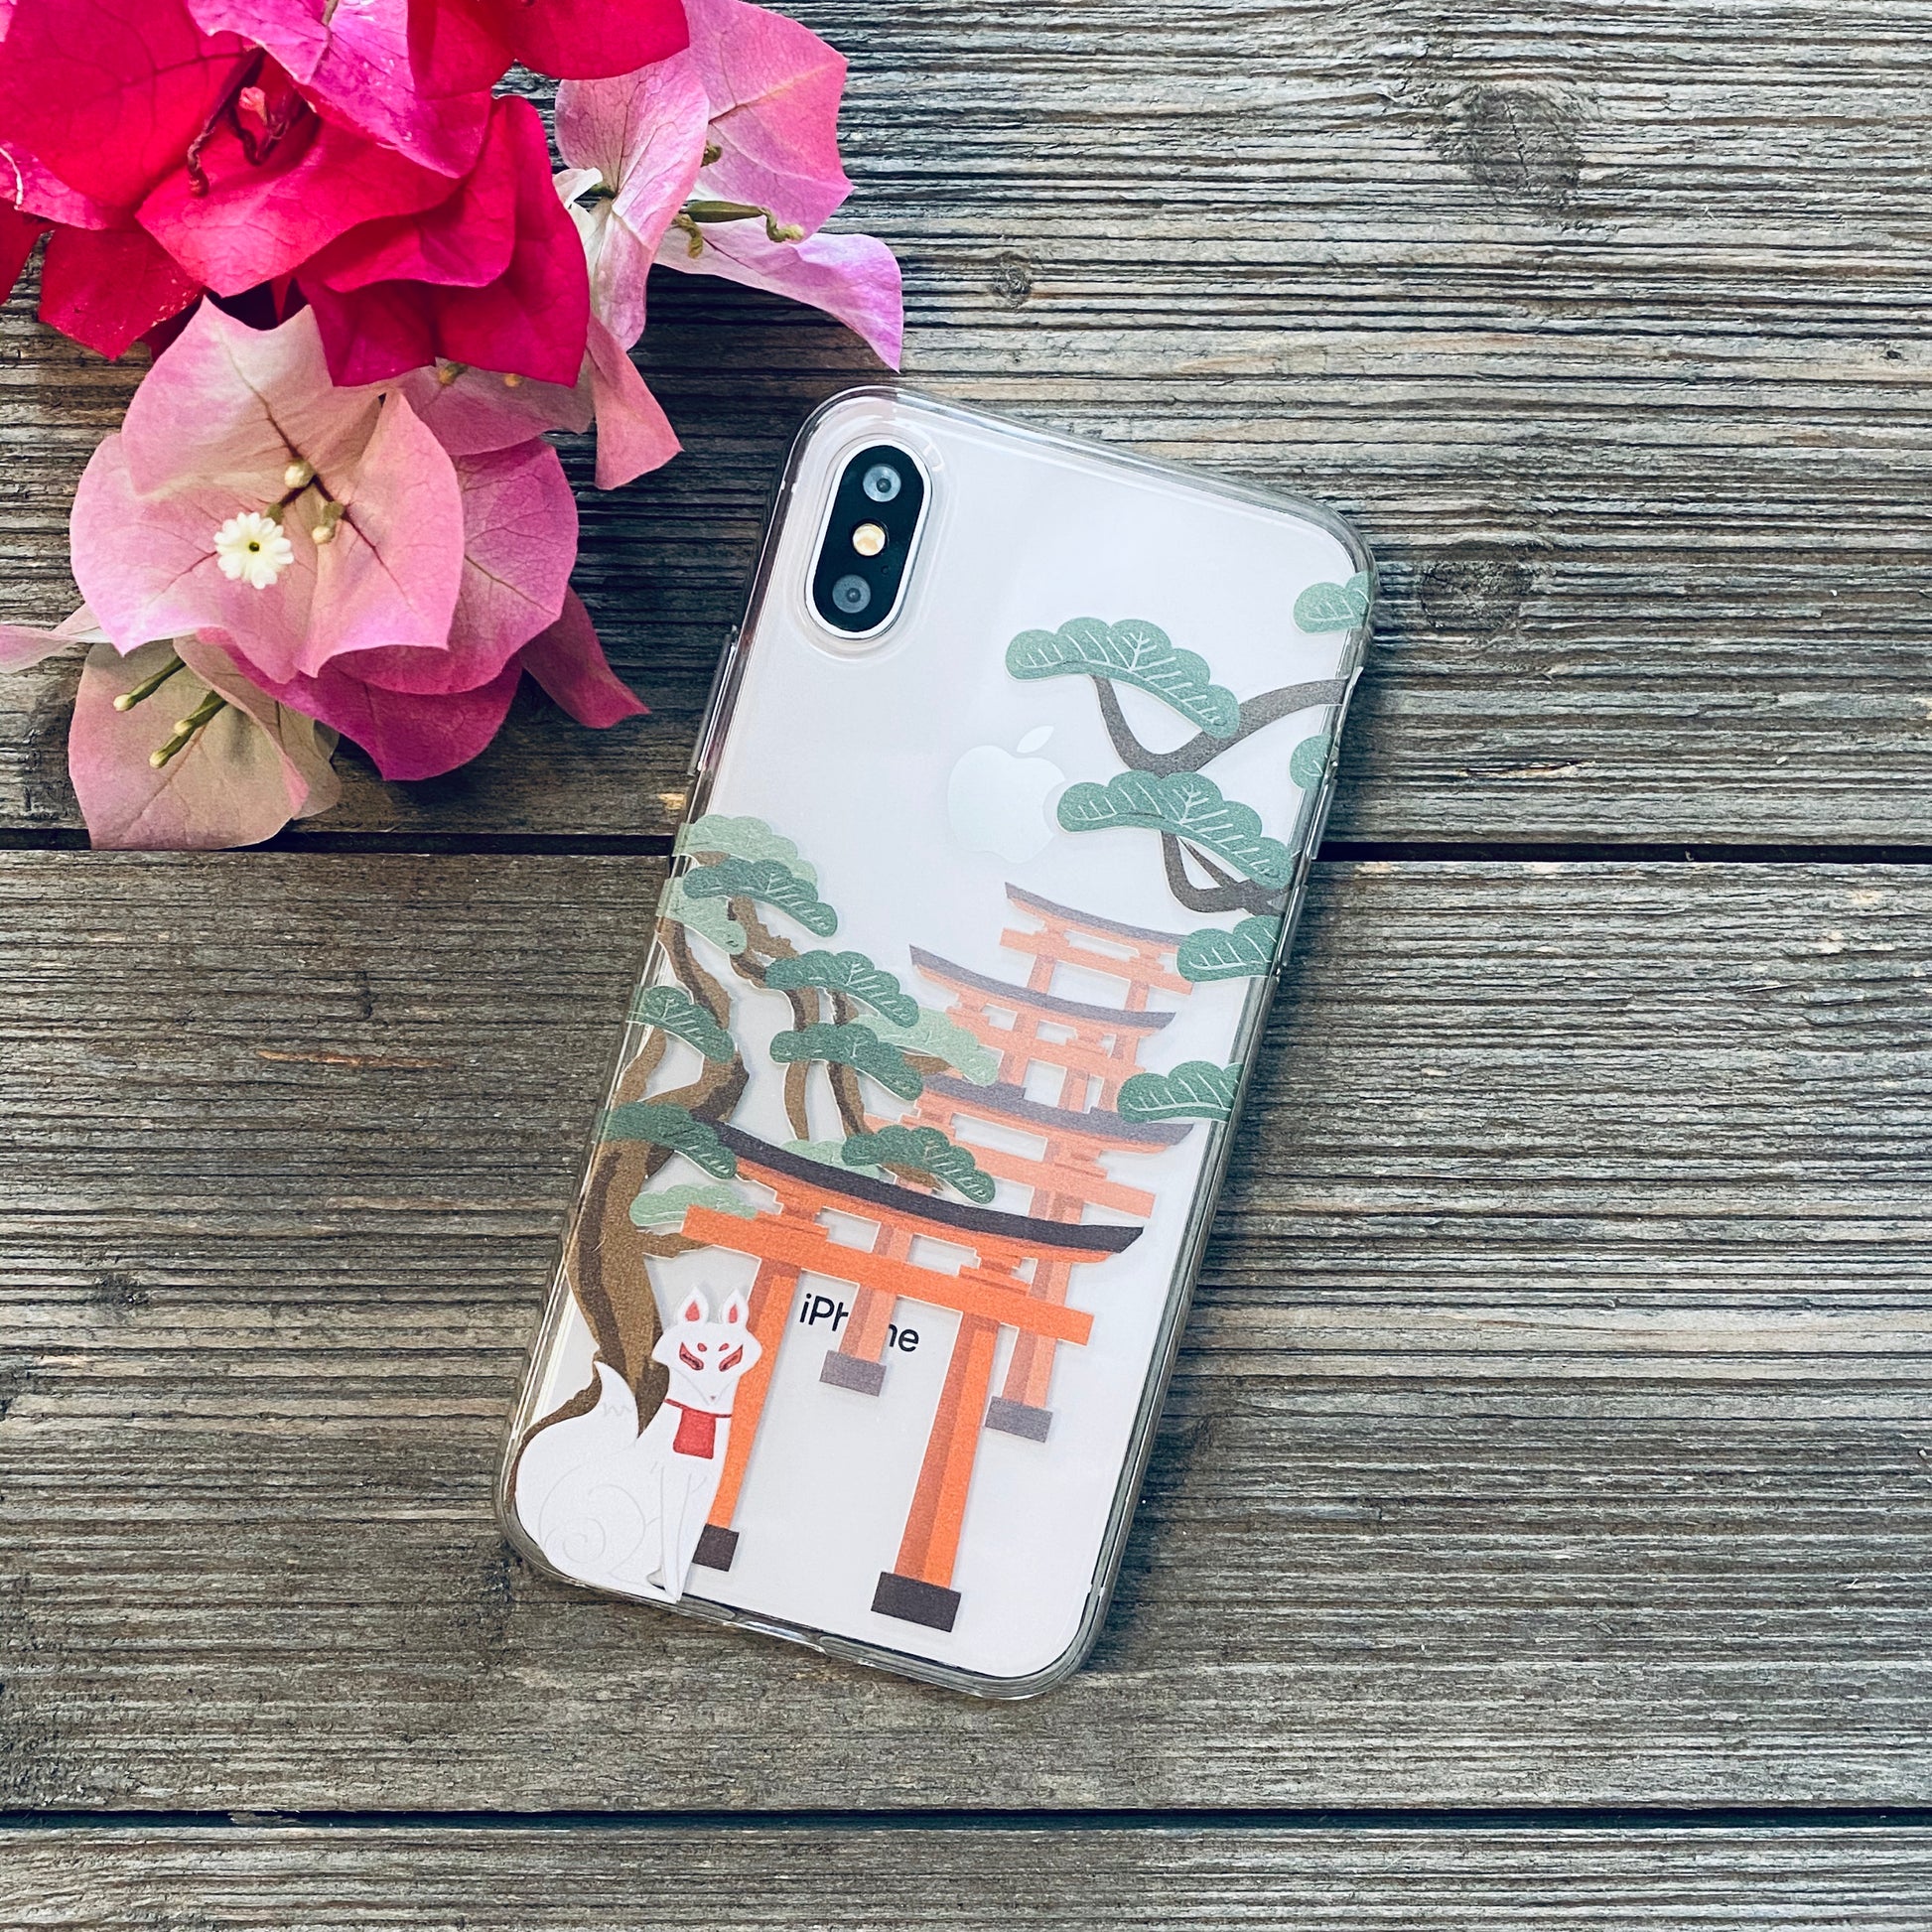 japan fushimi inari iphone case